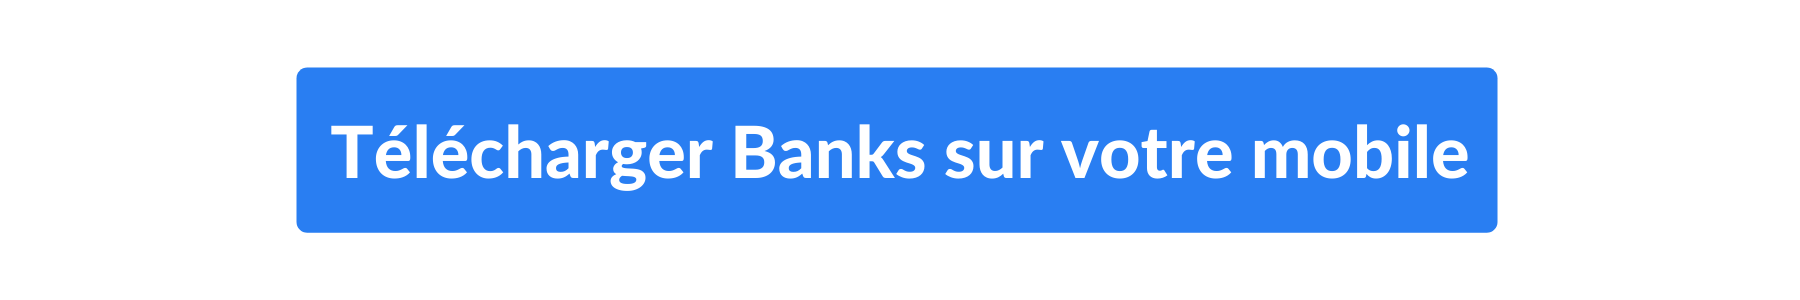 telecharger-banks-sur-mobile-1